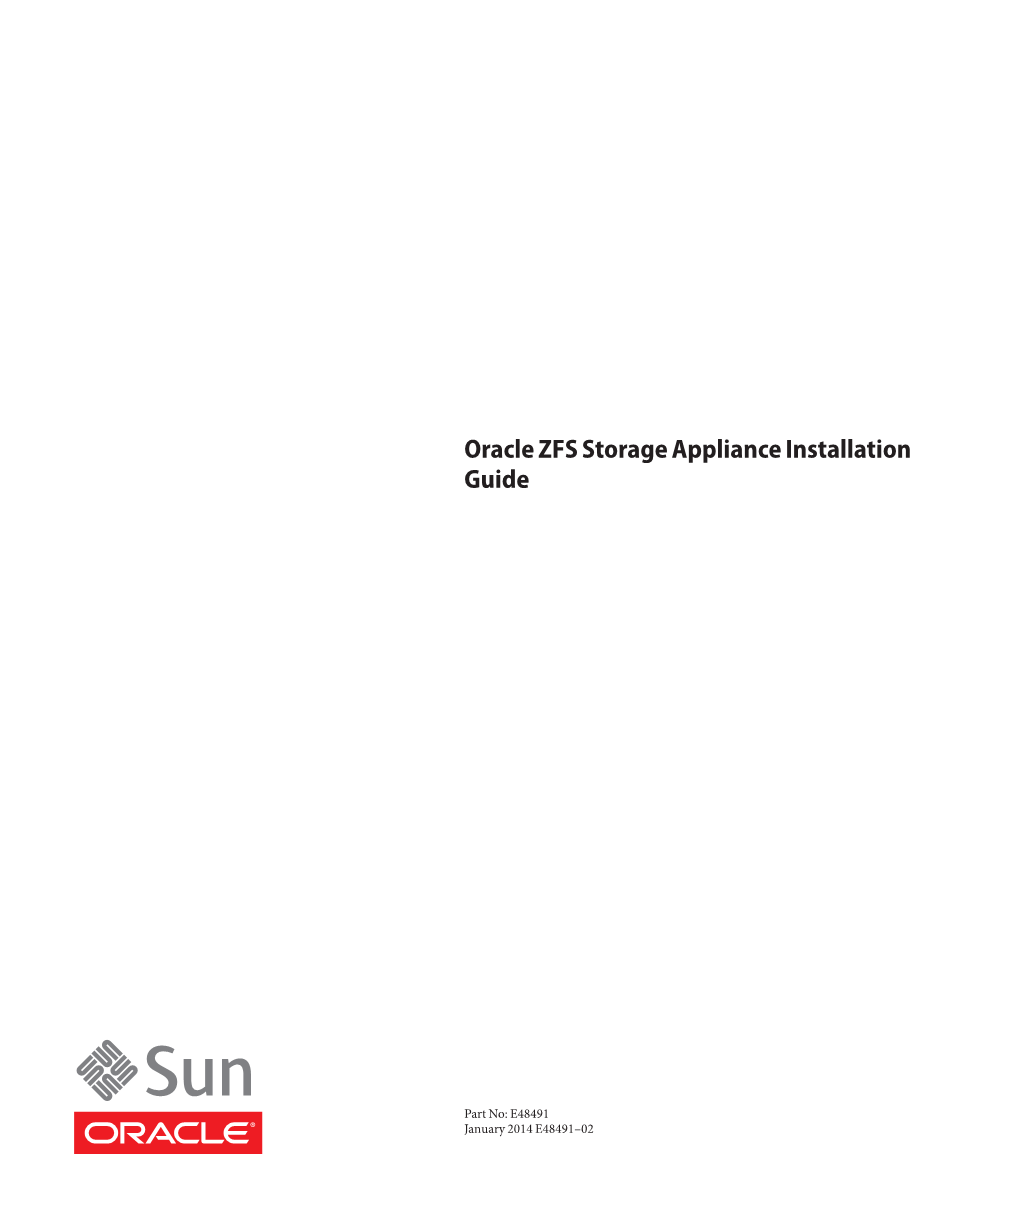 Oracle ZFS Storage Appliance Installation Guide